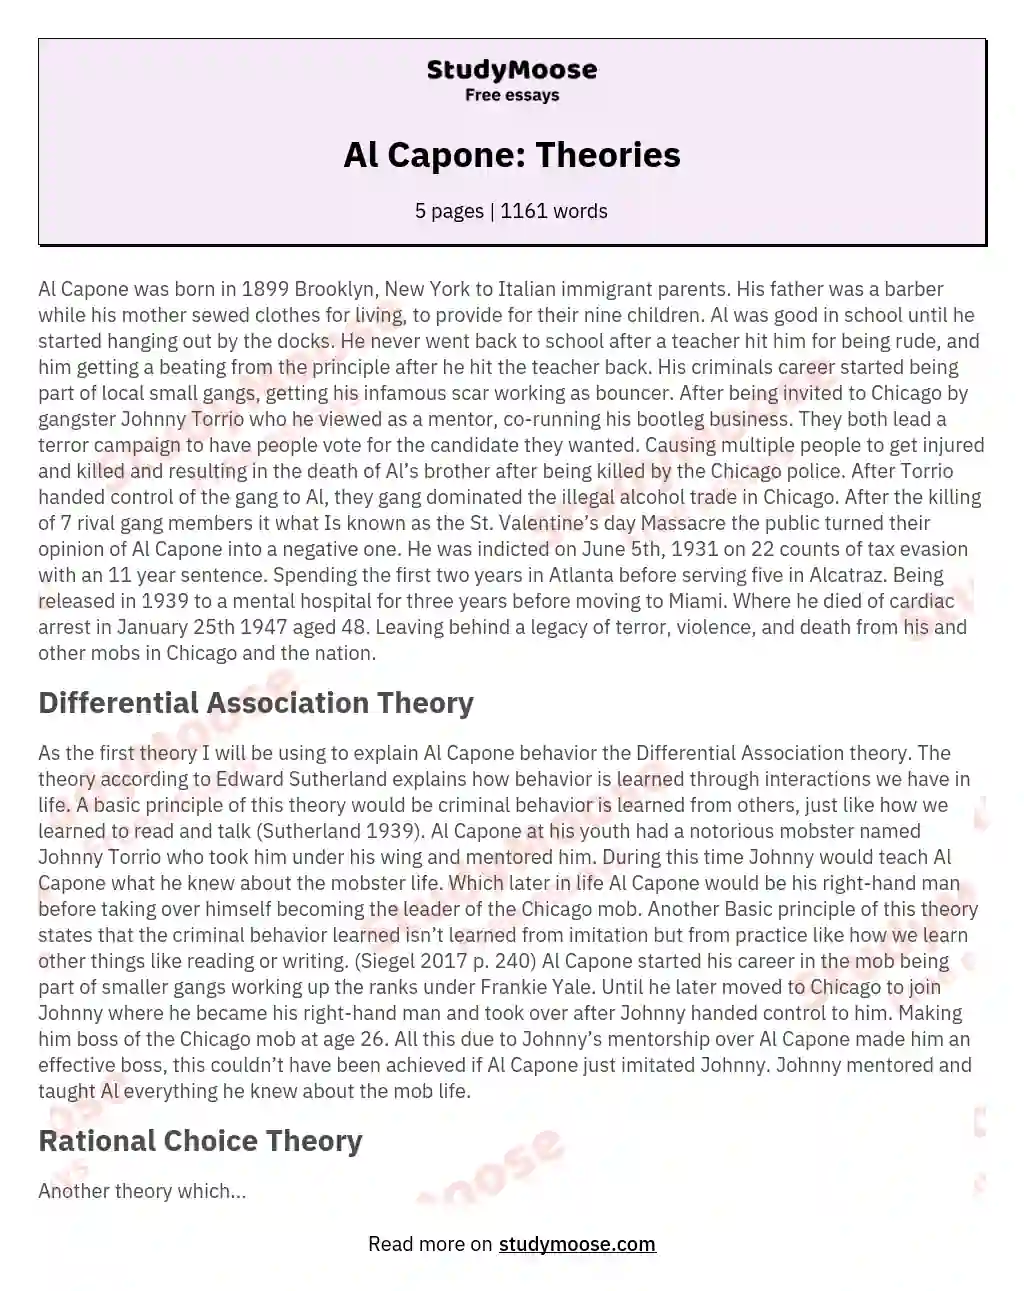 Al Capone: Theories essay